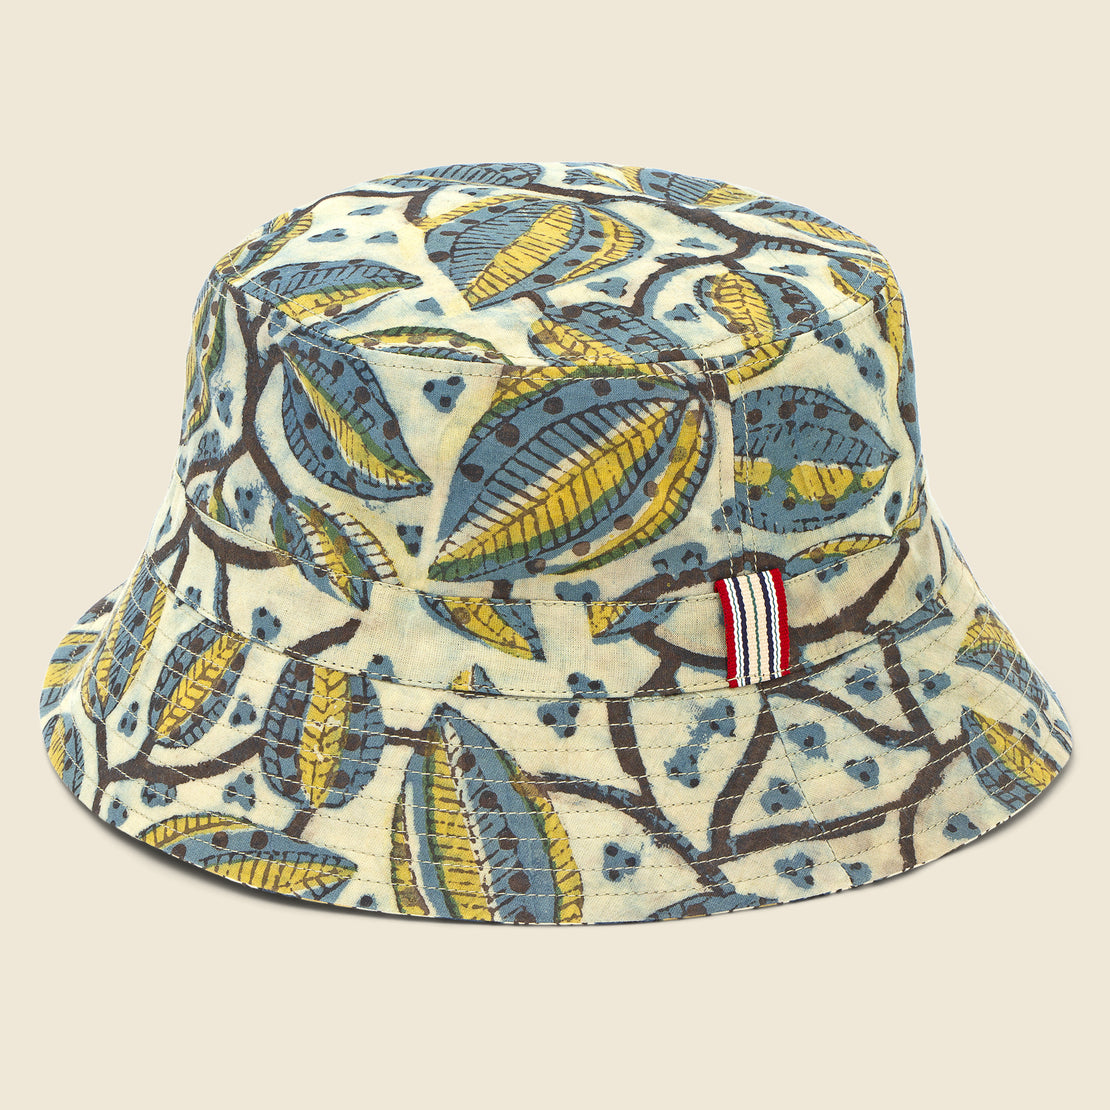 Kardo Block Print Reversible Bucket Hat - Gold Indigo Daisy/Blue Leaf